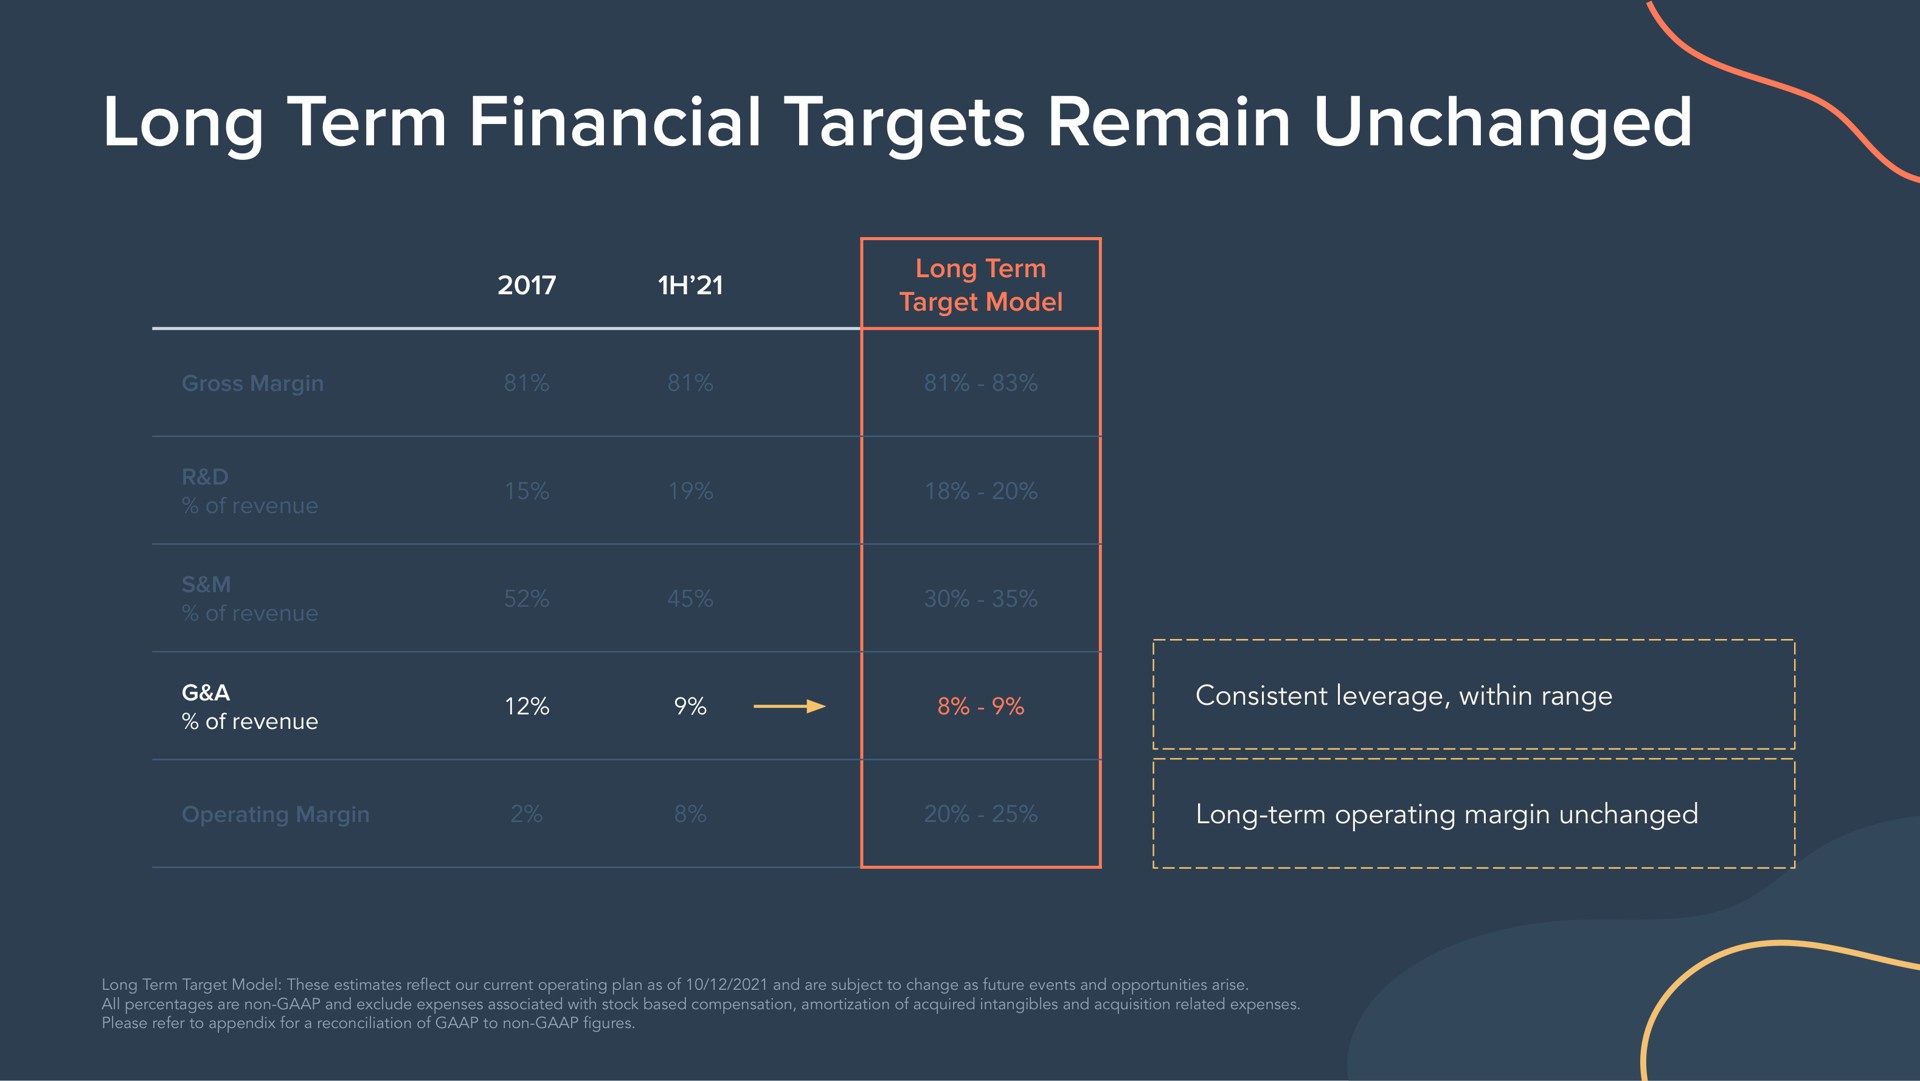 long term financial targets remain unchanged | Hubspot